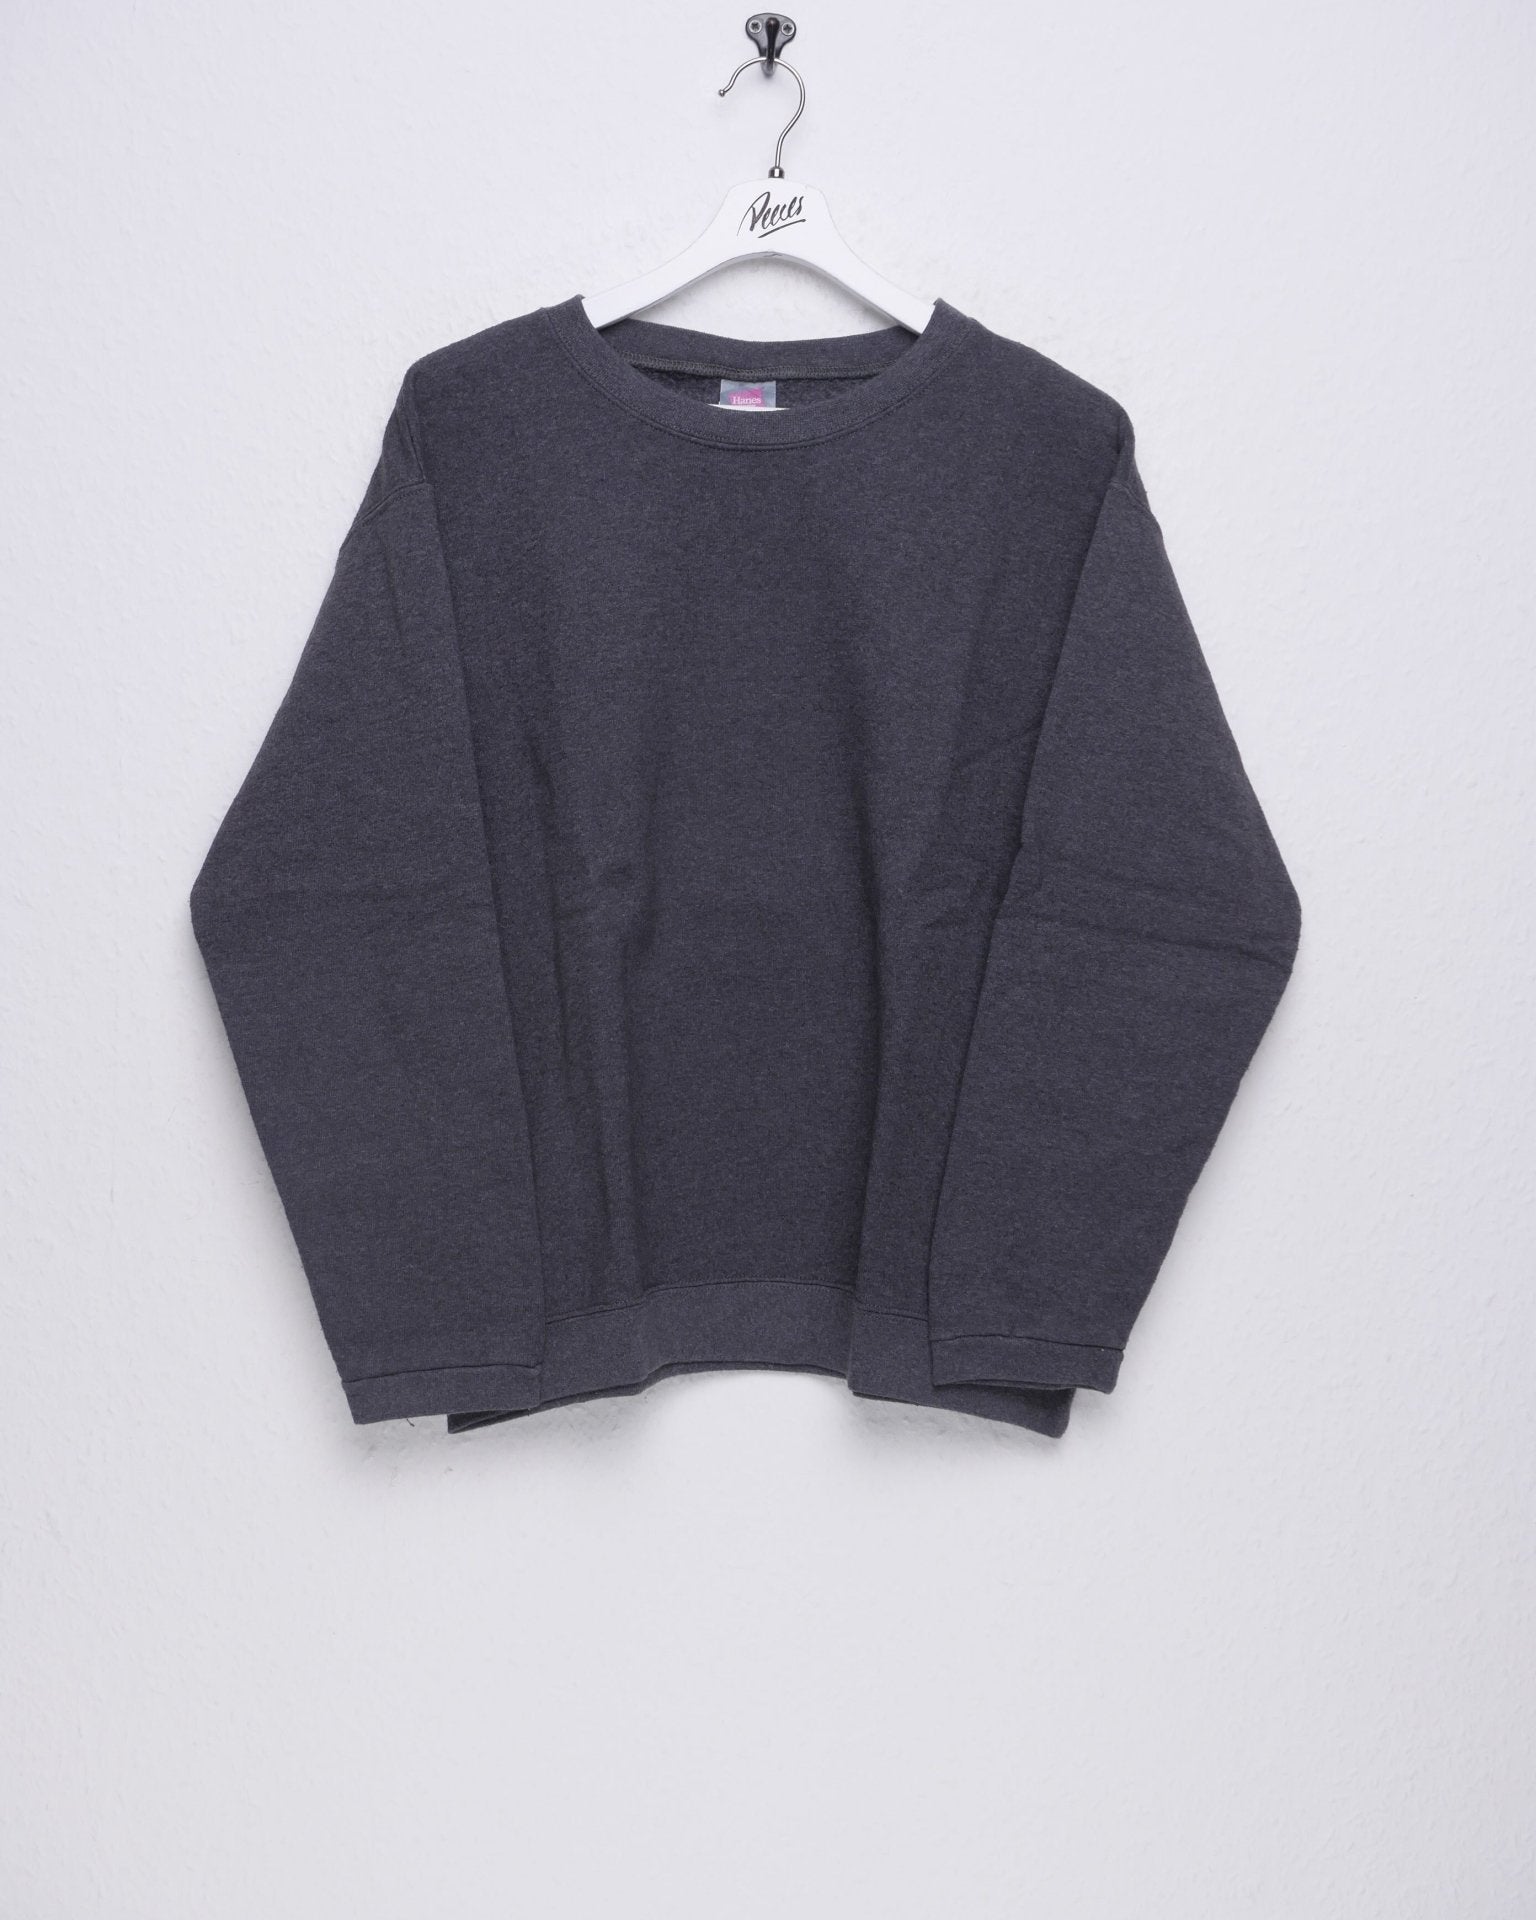 Plain basic grey Sweater - Peeces